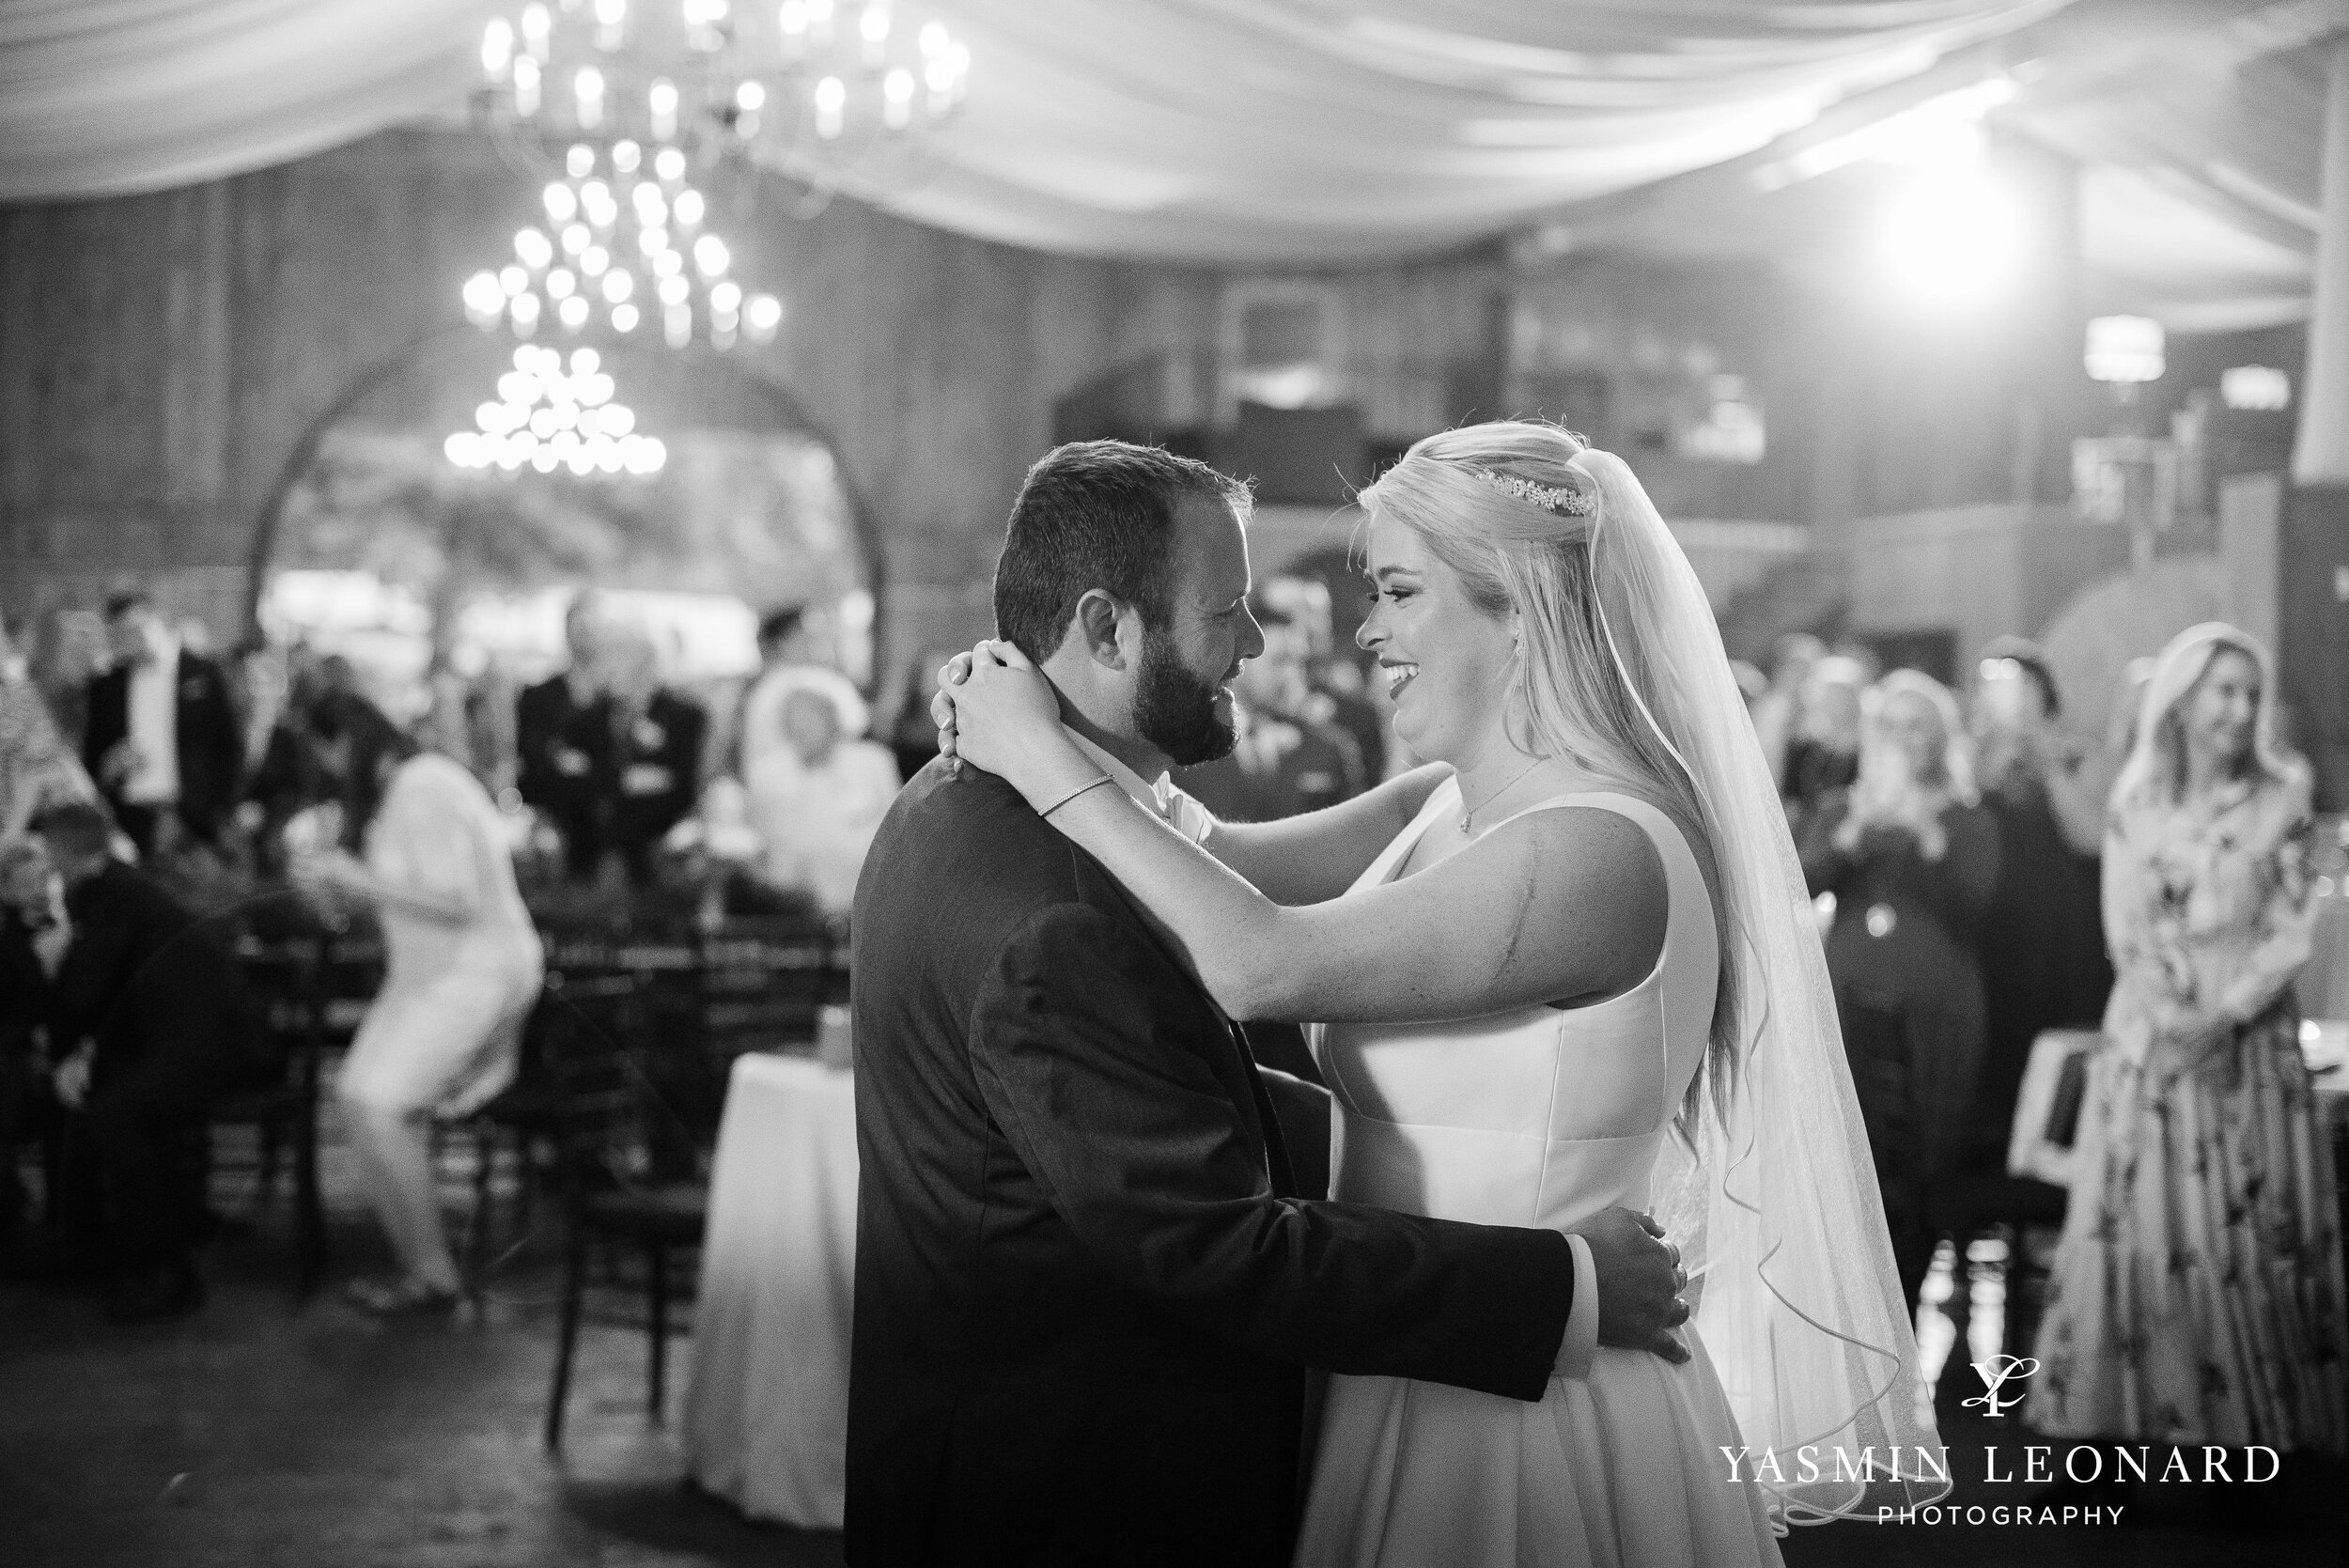 Dan and Nicole - October 5, 2019 - Adaumont - Yasmin Leonard Photography - Horse Carriage Wedding - Adaumont Wedding - High Point Wedding Photographer - Fall Wedding - Fall Wedding Colors-59.jpg